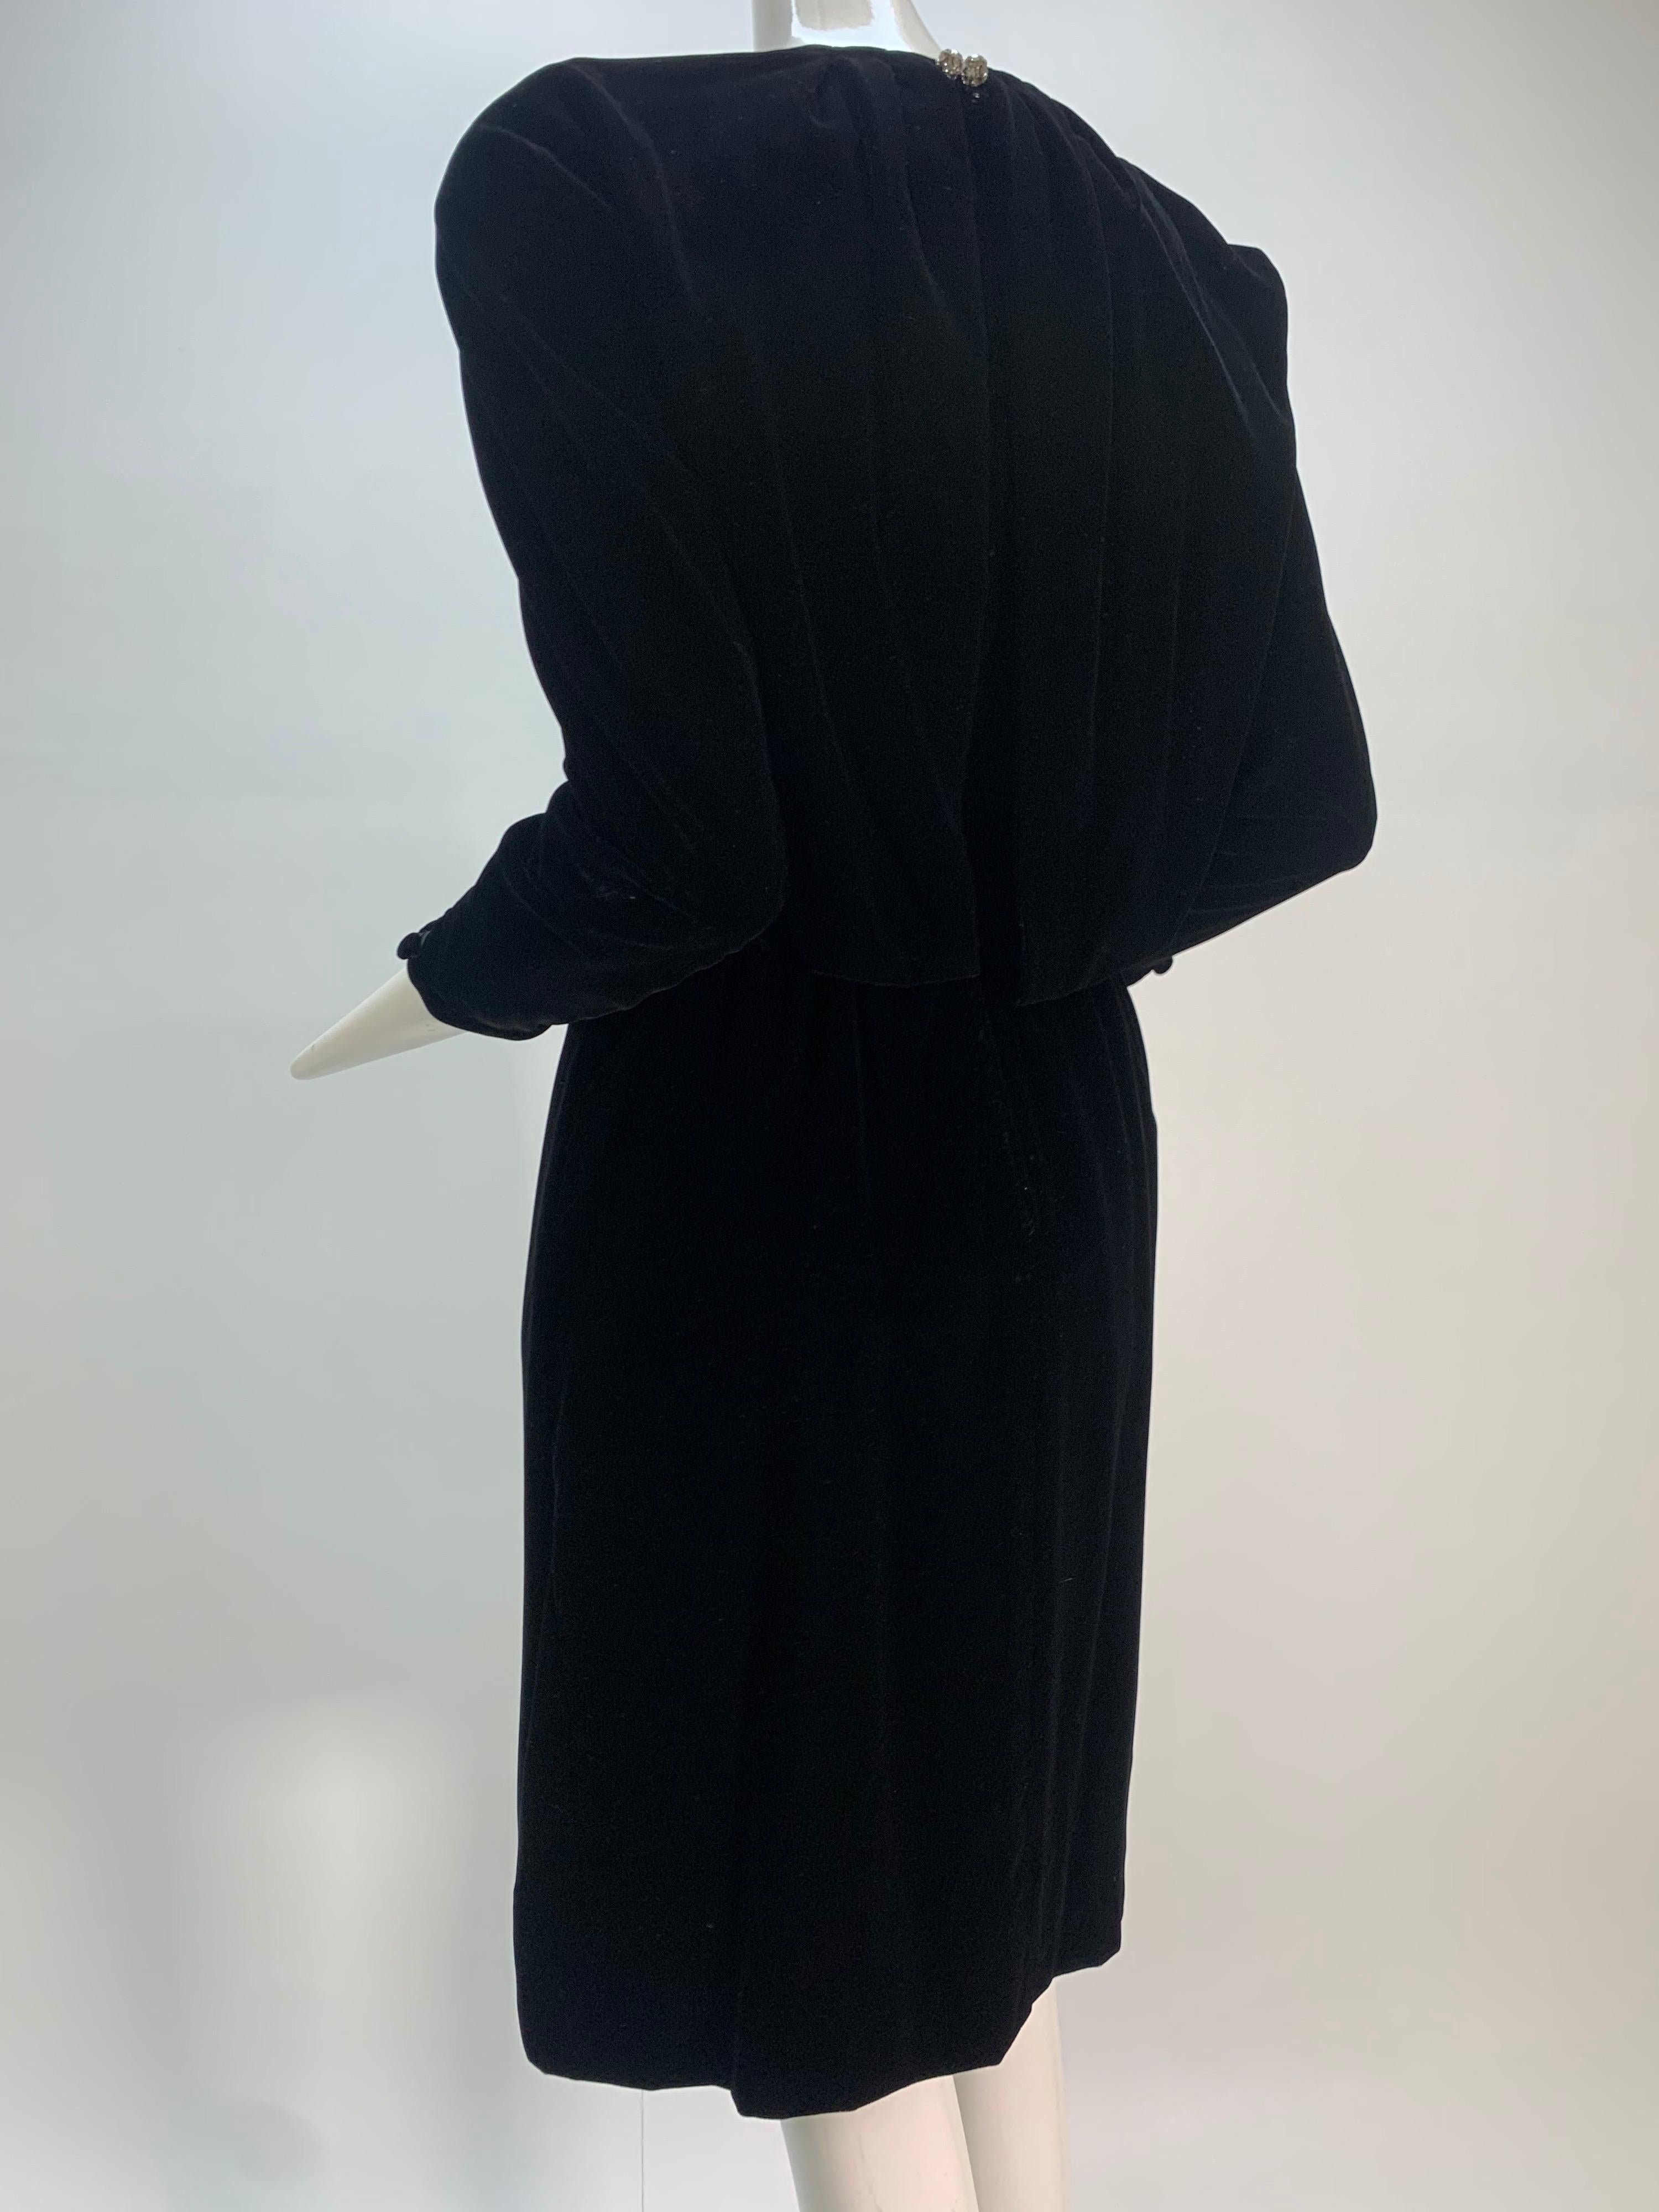 1980 Carolyne Roehm Black Velvet Cocktail Dress W/ Rhinestone & Sequin Stripes For Sale 3